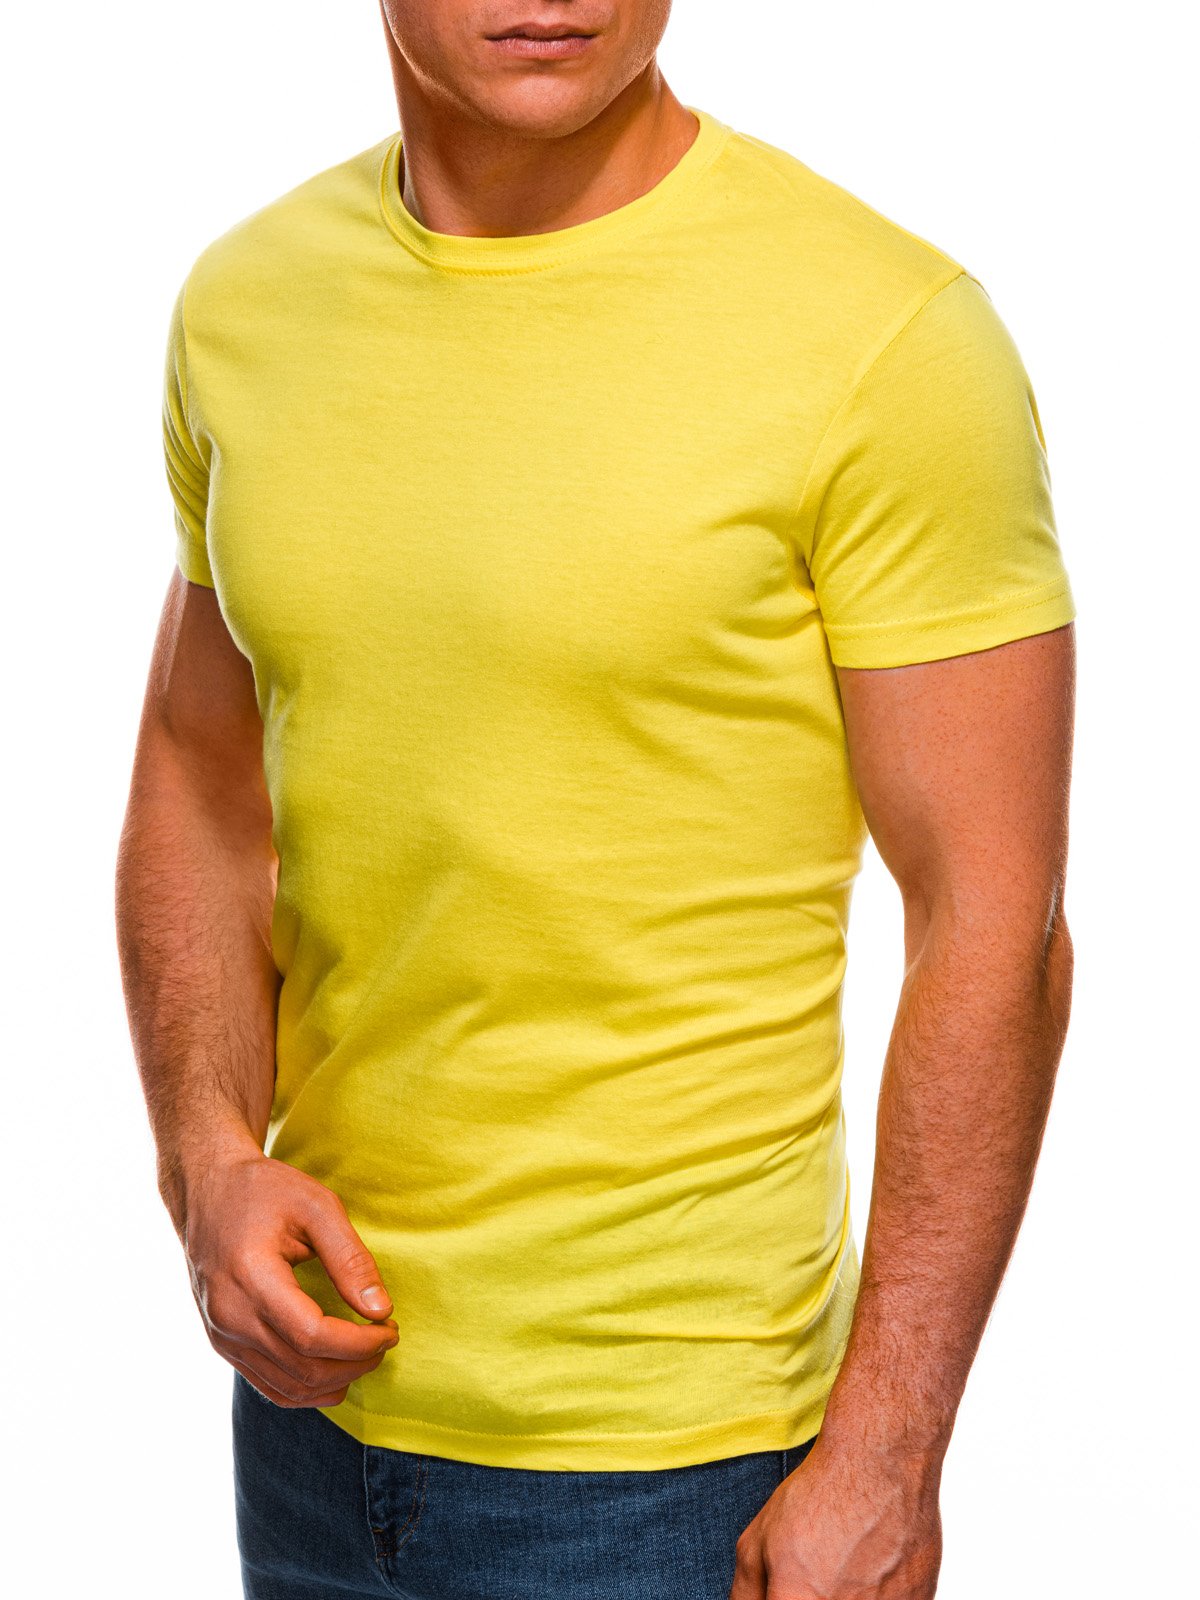 Men S Plain T Shirt S970 Yellow Modone Wholesale Clothing For Men